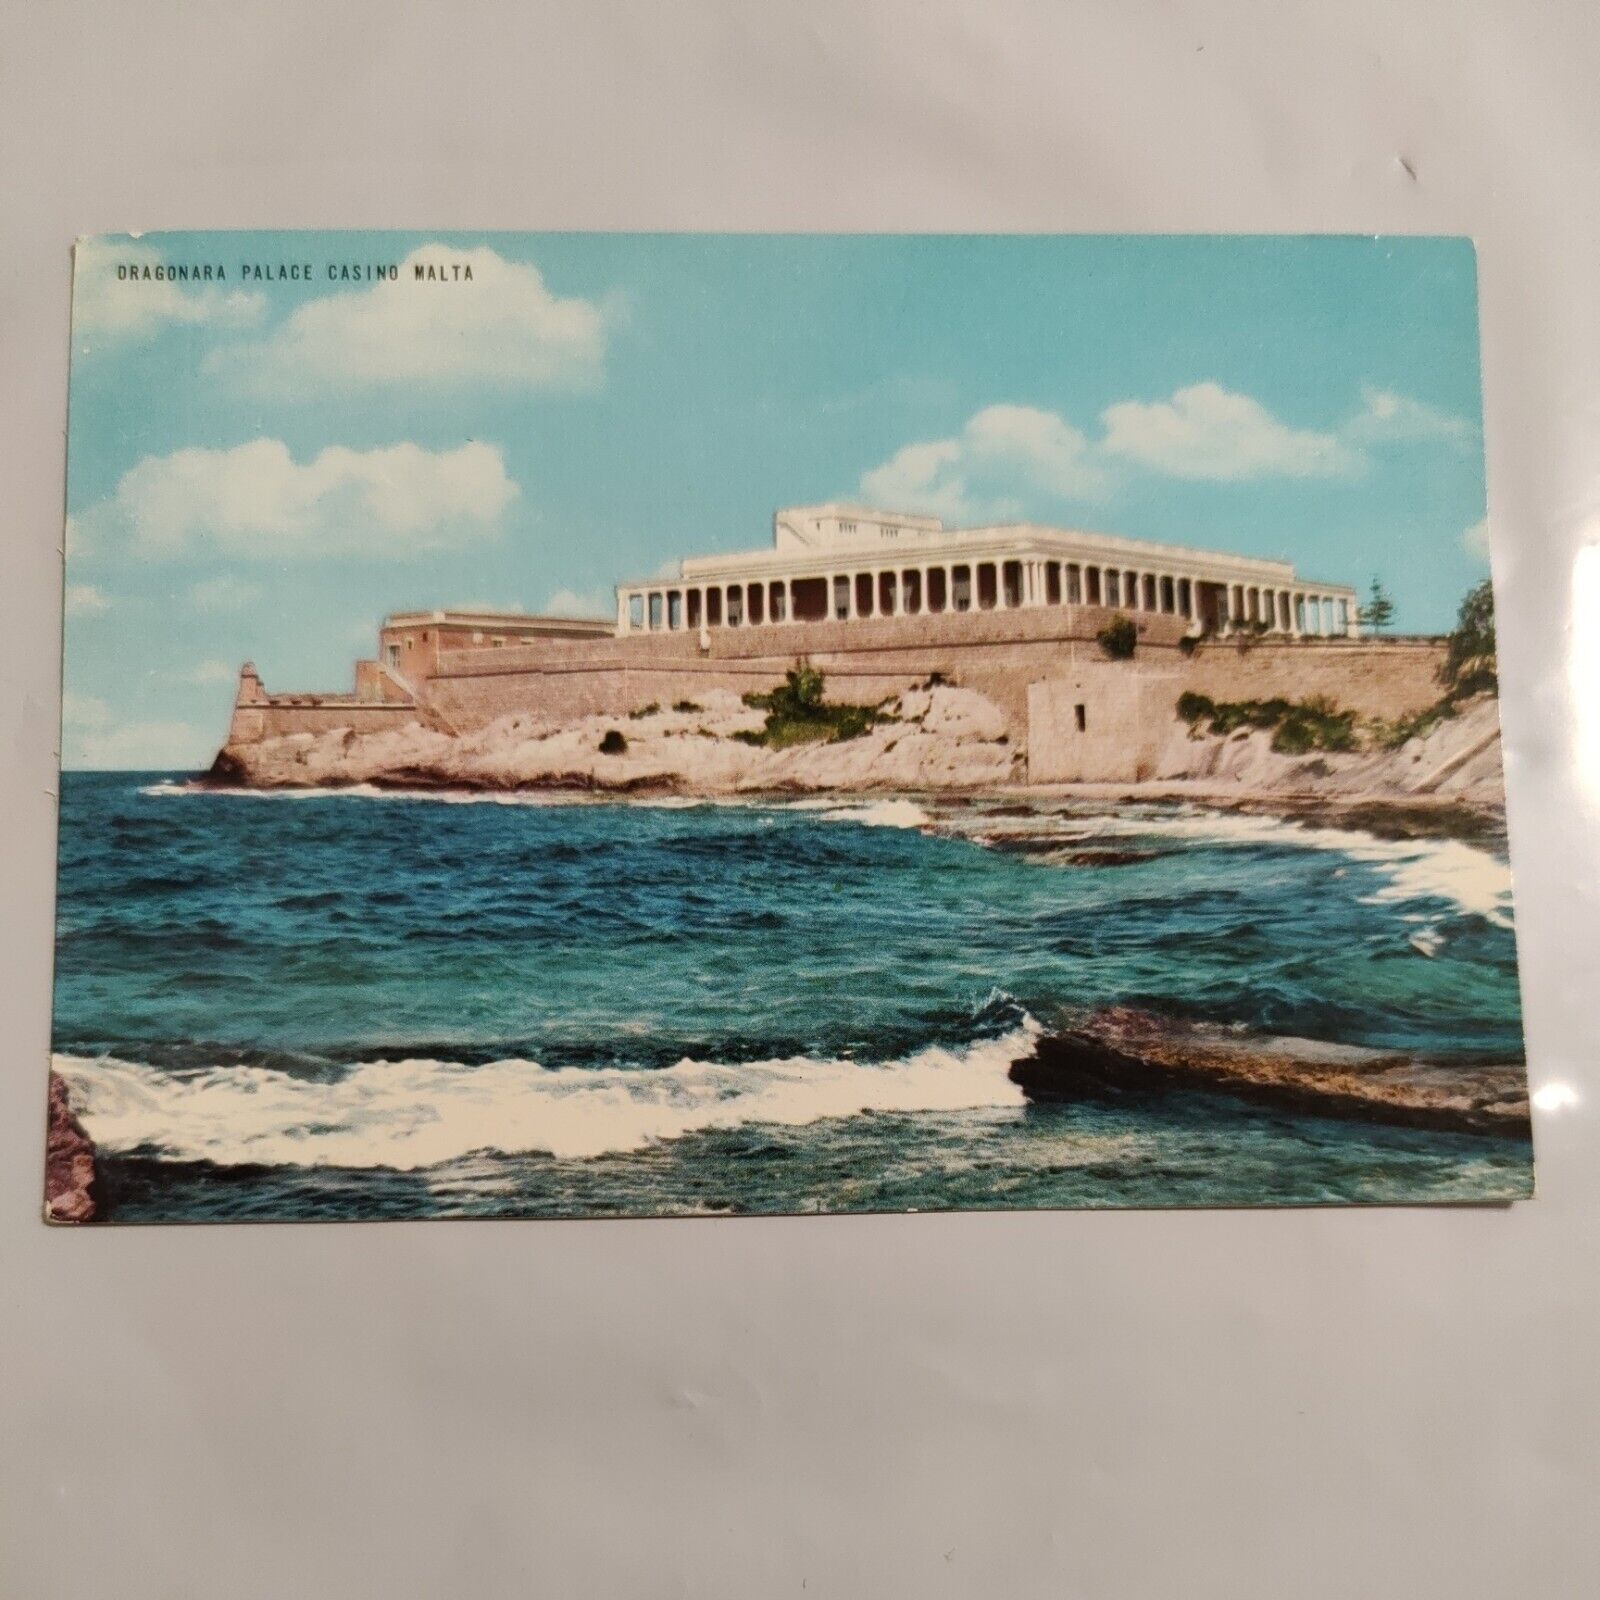 Dragonare Palace Casino, Malta  Vintage Postcard